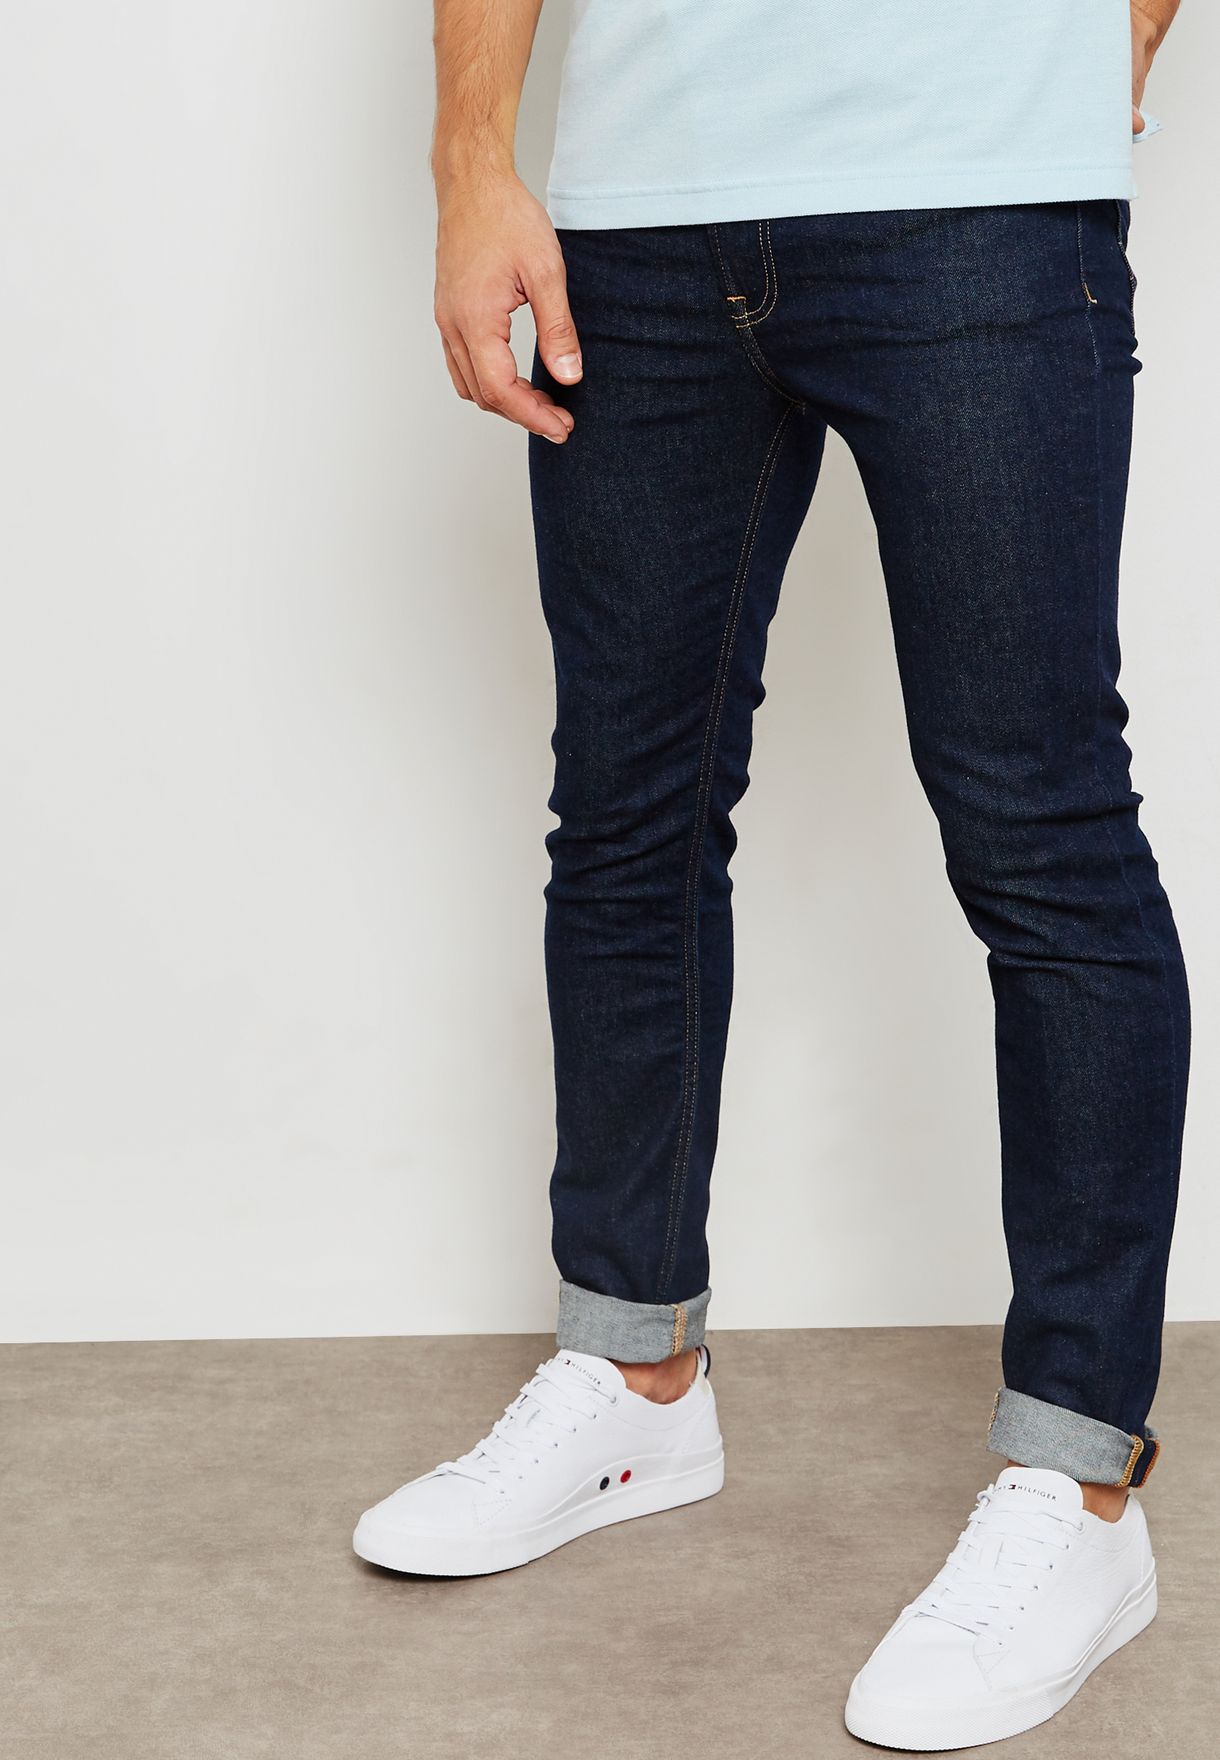 hilfiger simon jeans